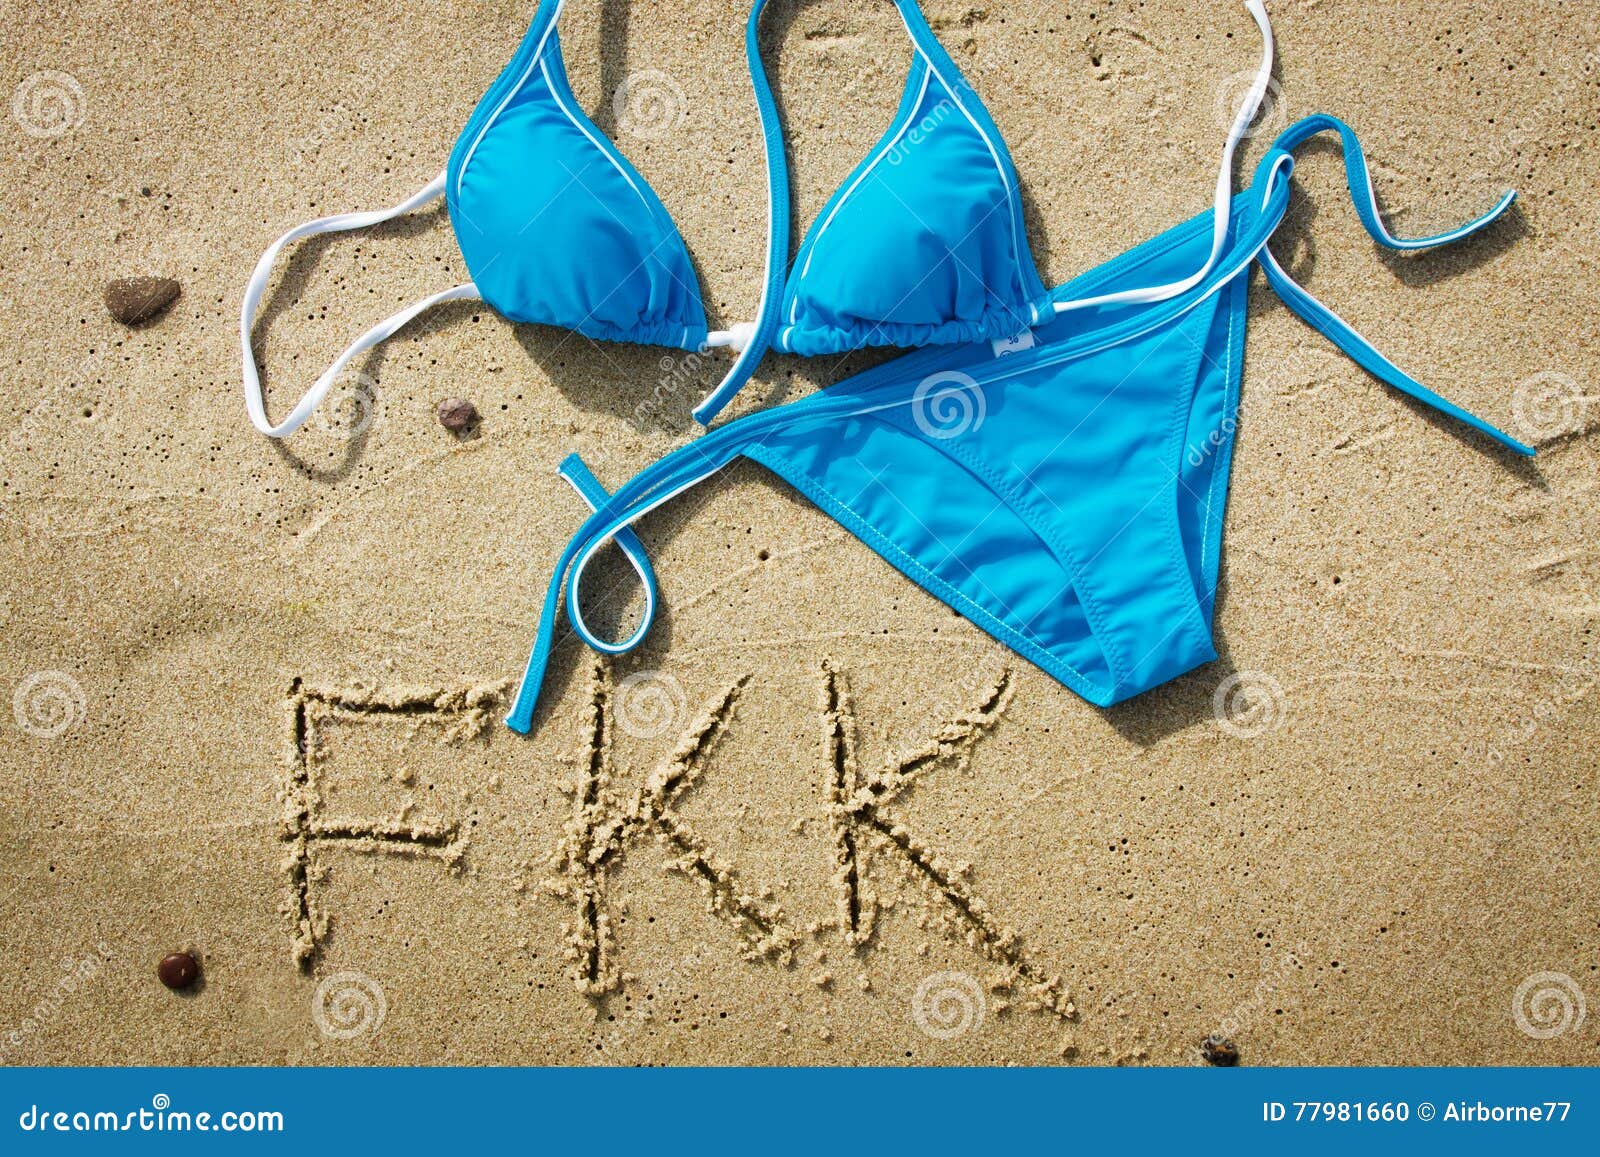 Ibiza fkk naked volleyball